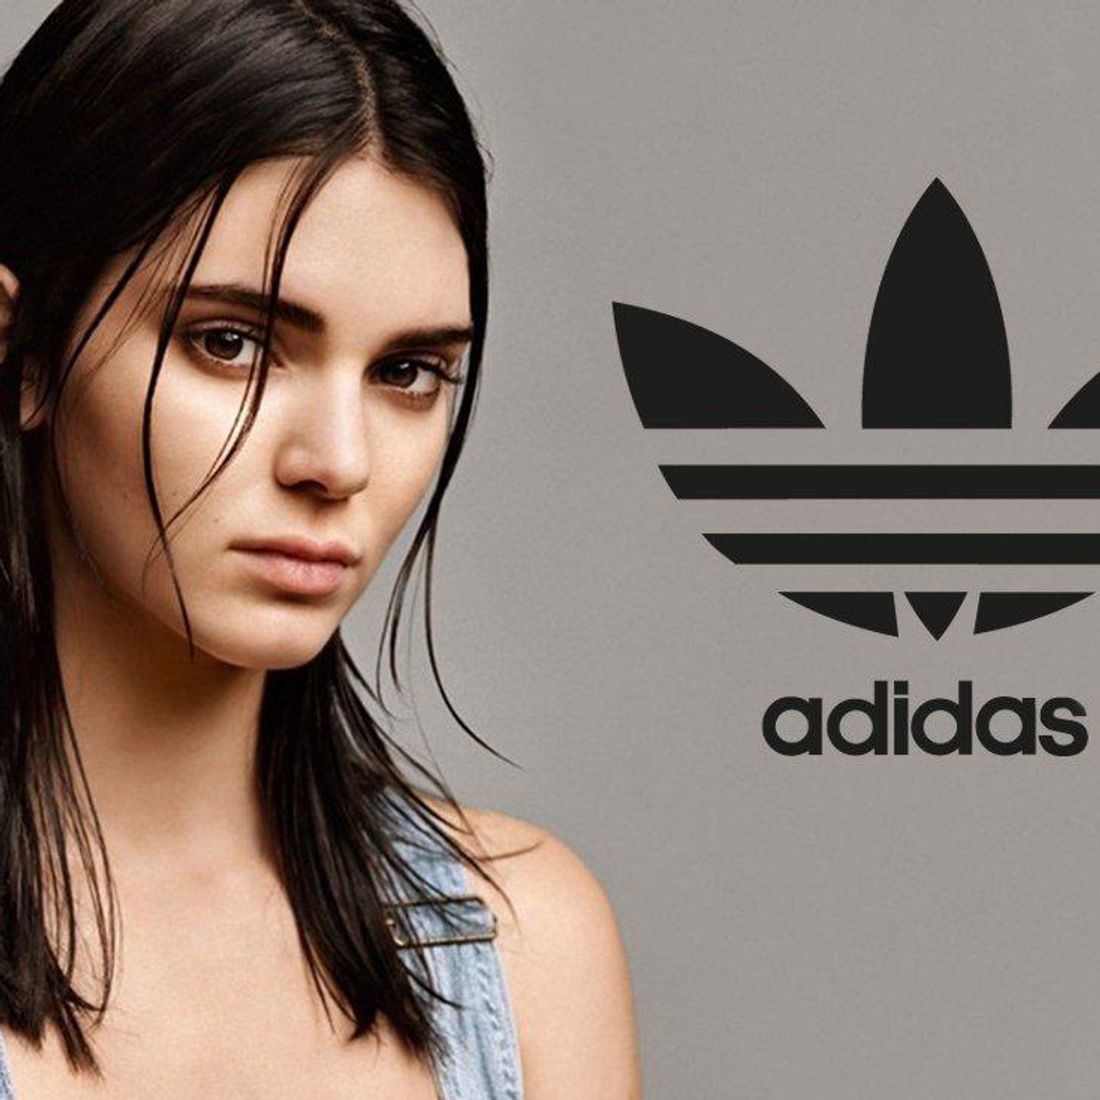 Kendall Jenner's Originals Ad Is Getting Savaged - Sneaker Freaker